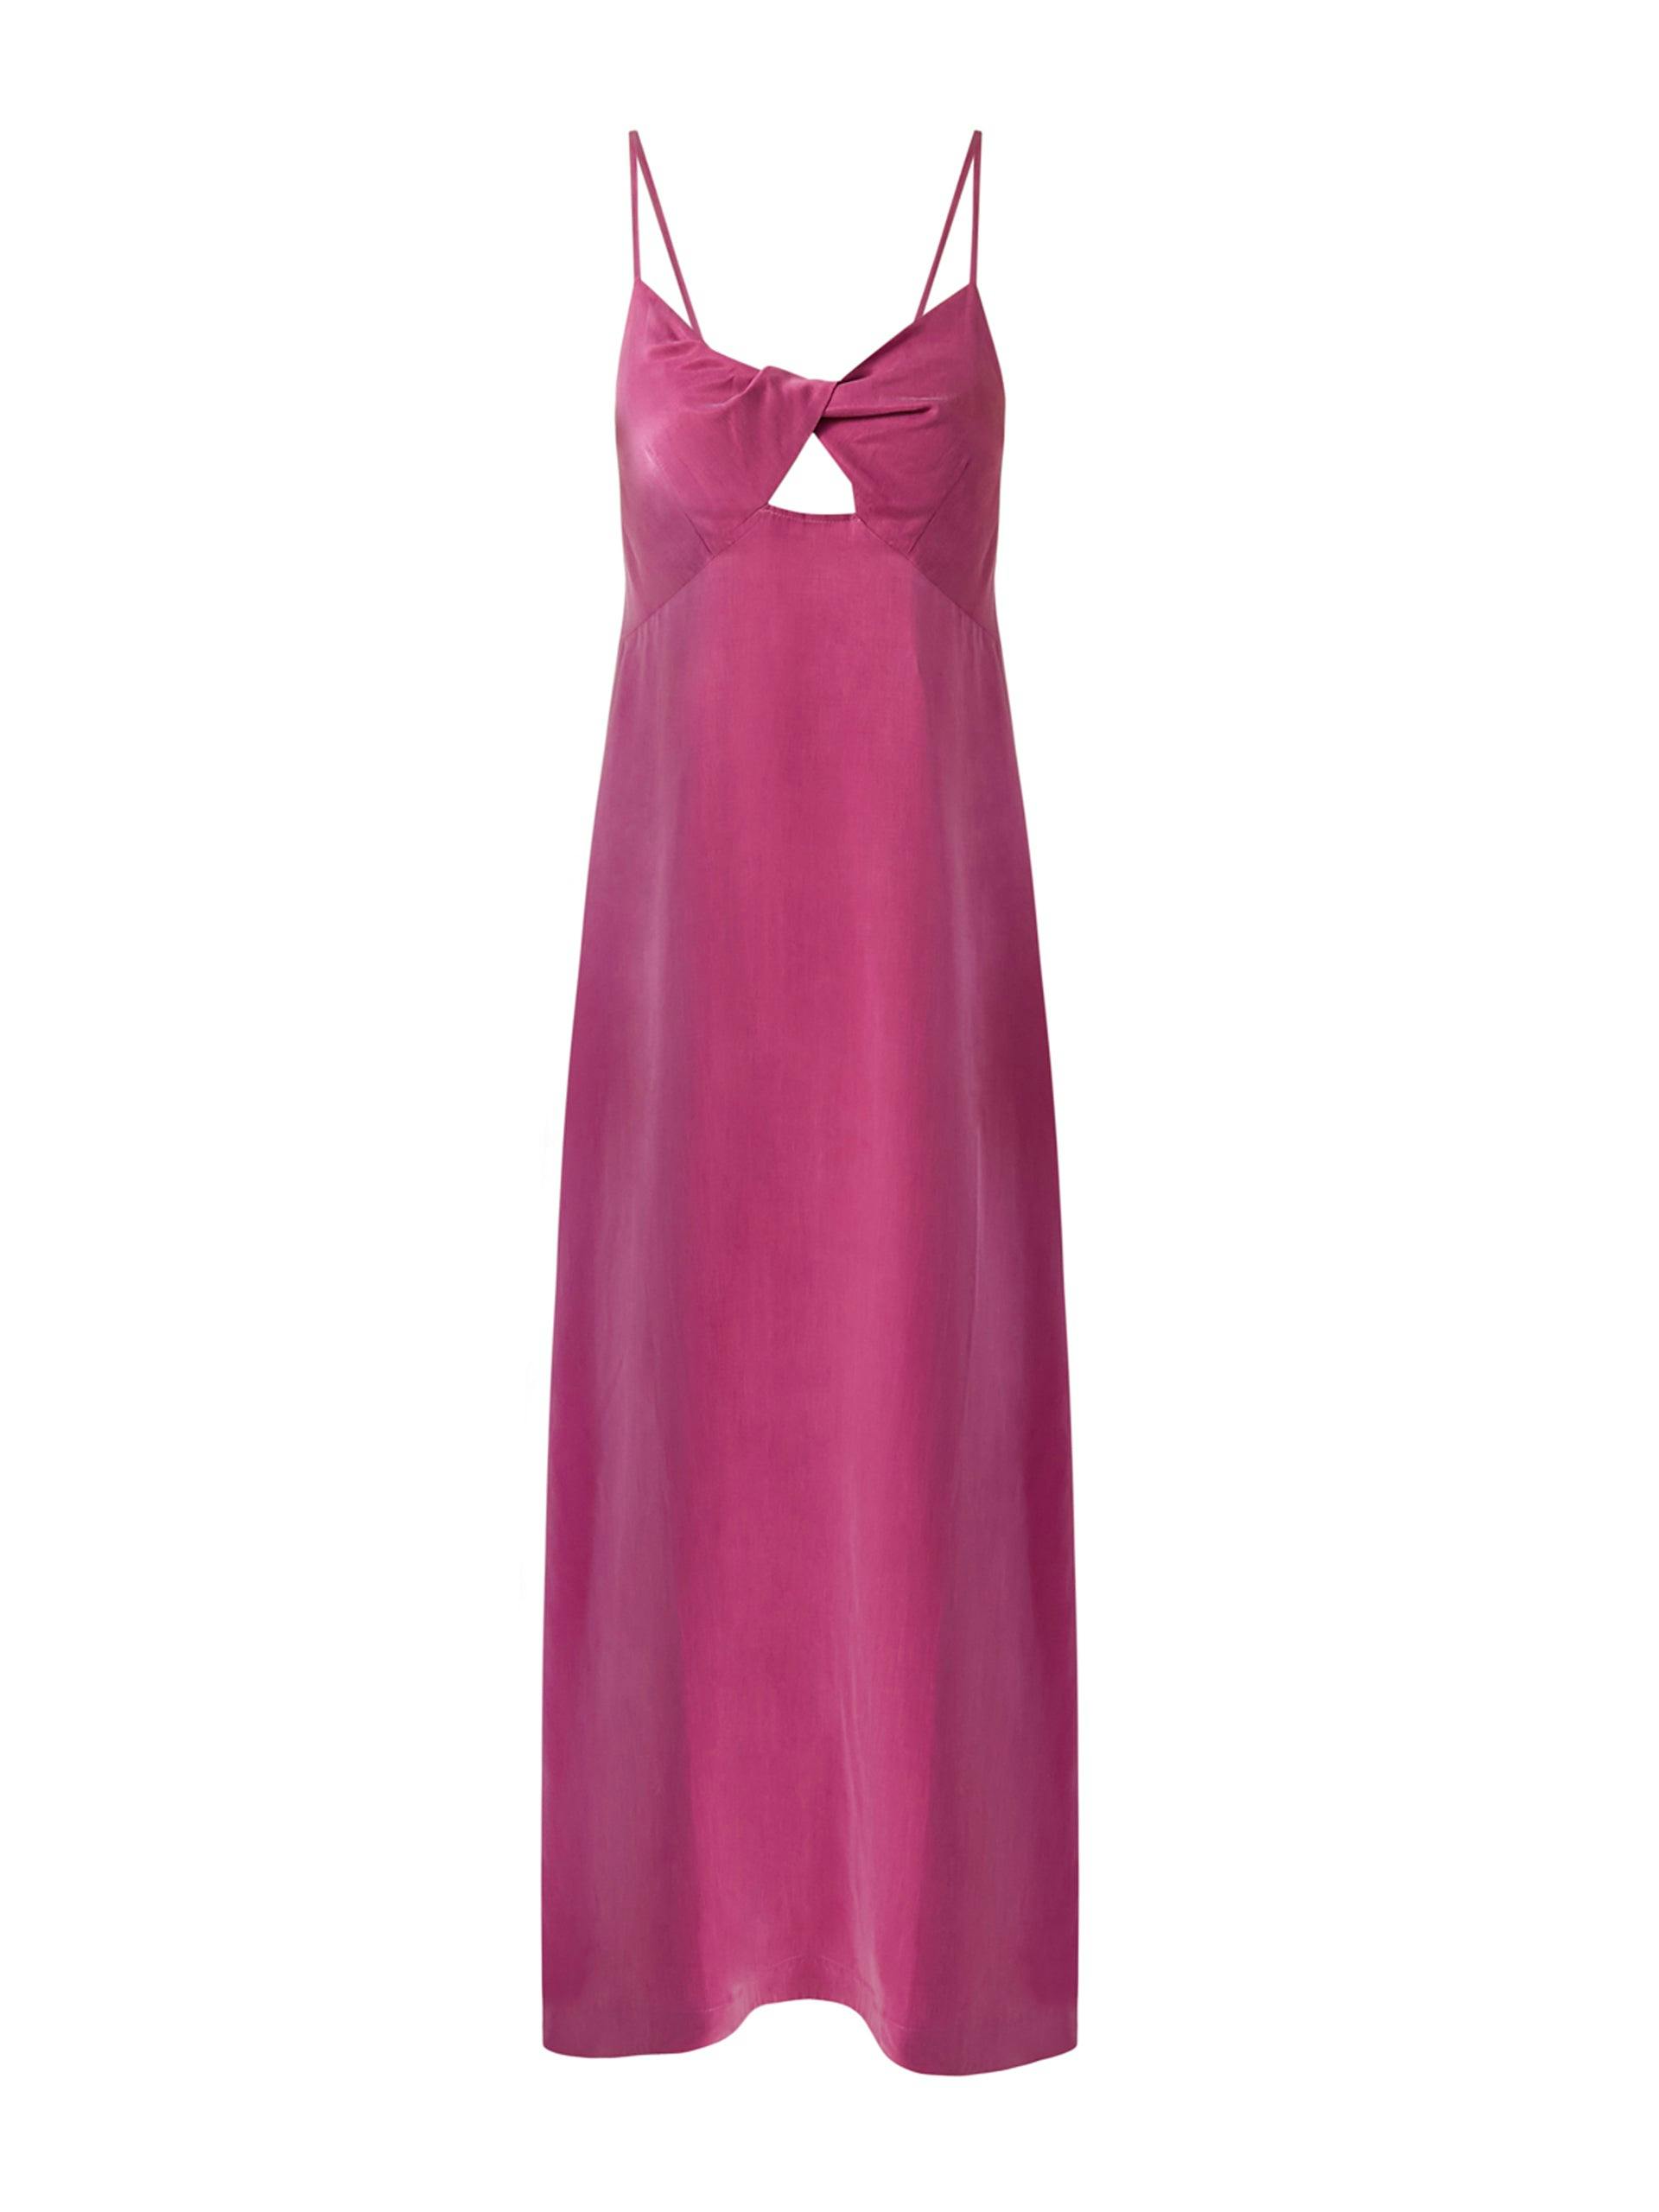 Lara pink linen twist dress